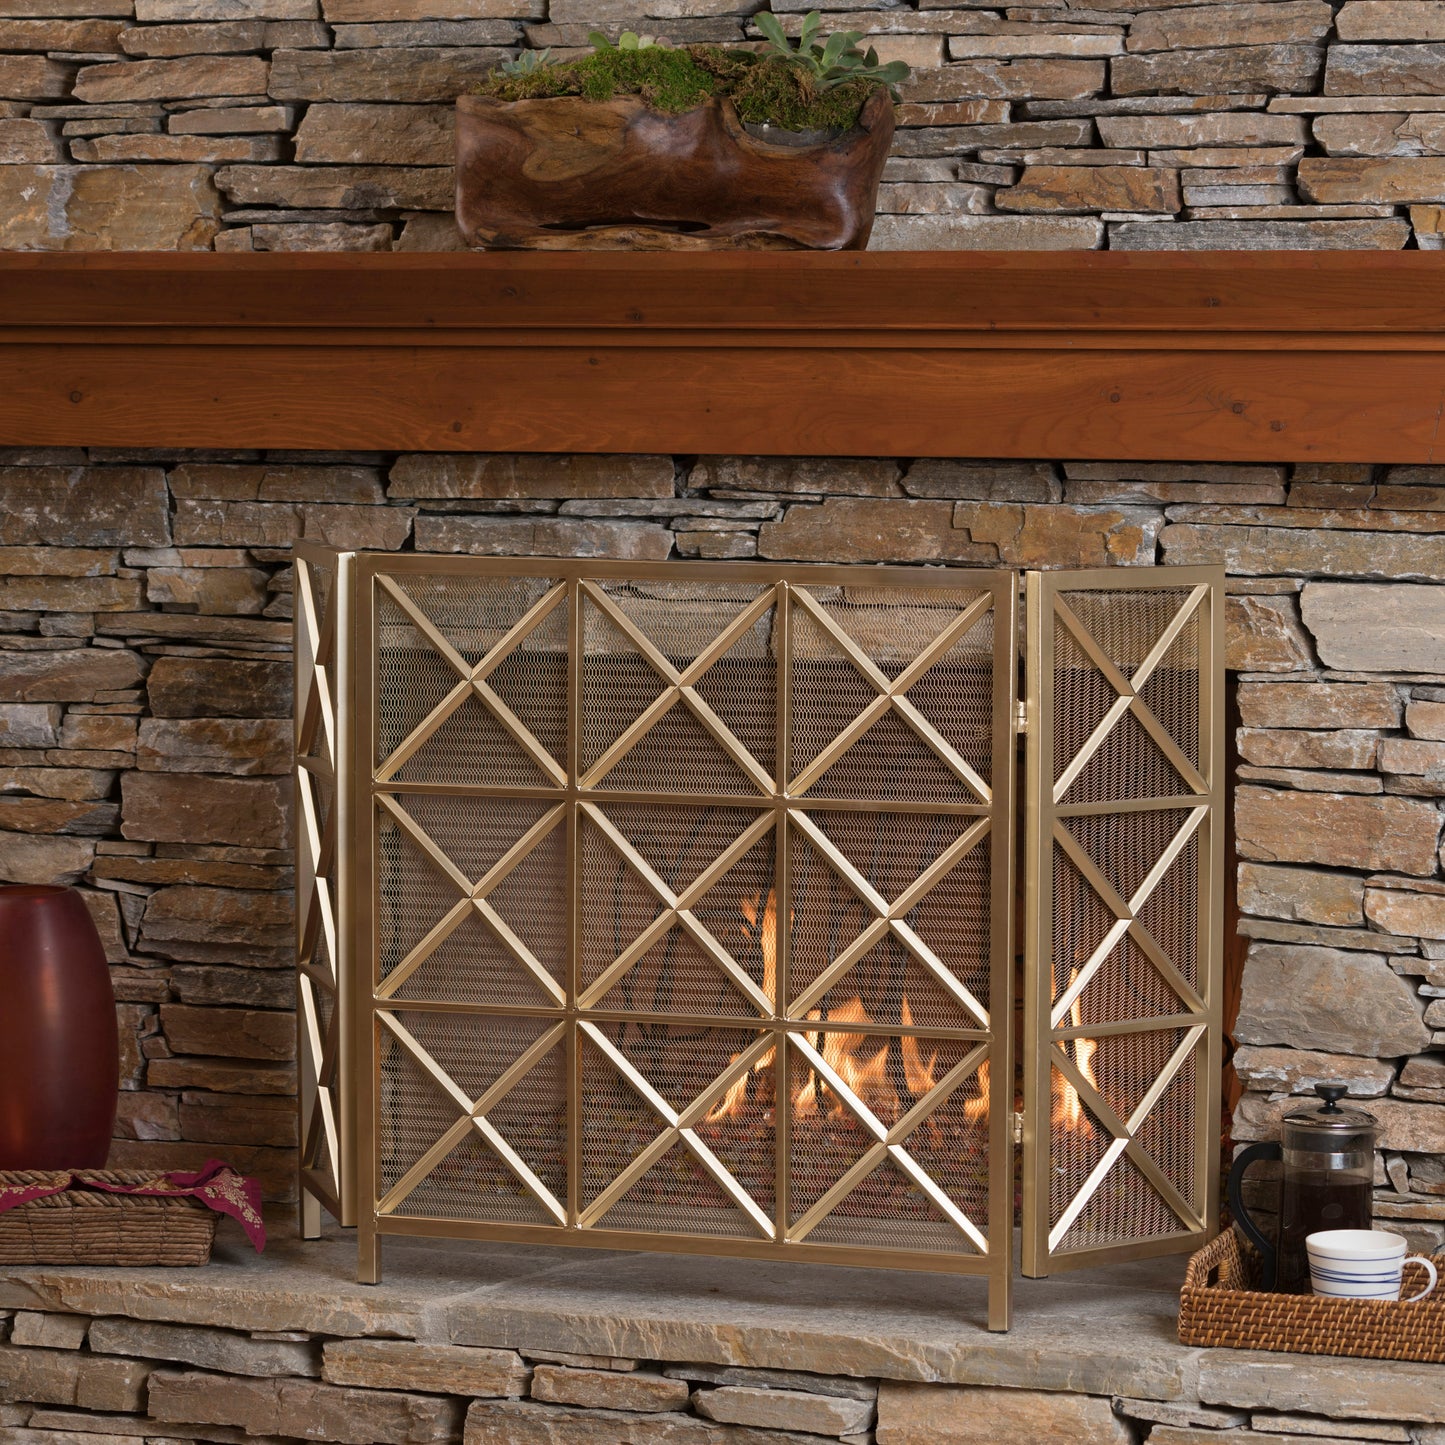 Mandralla Modern 3-Panel Iron Fireplace Screen with Cross Hatch Pattern